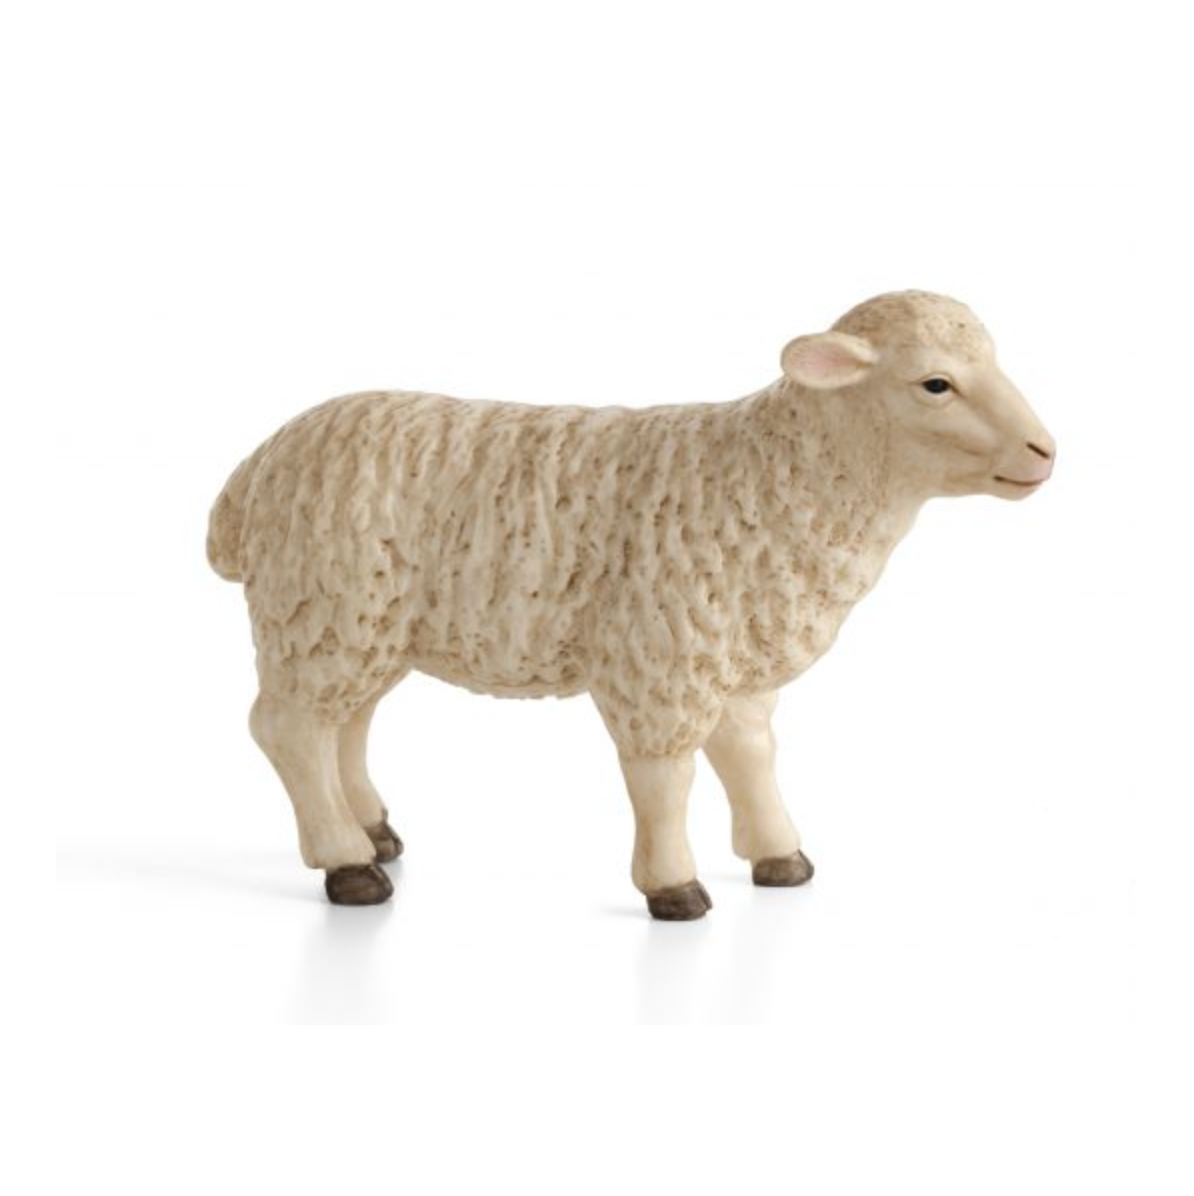 Sheep (ewe)